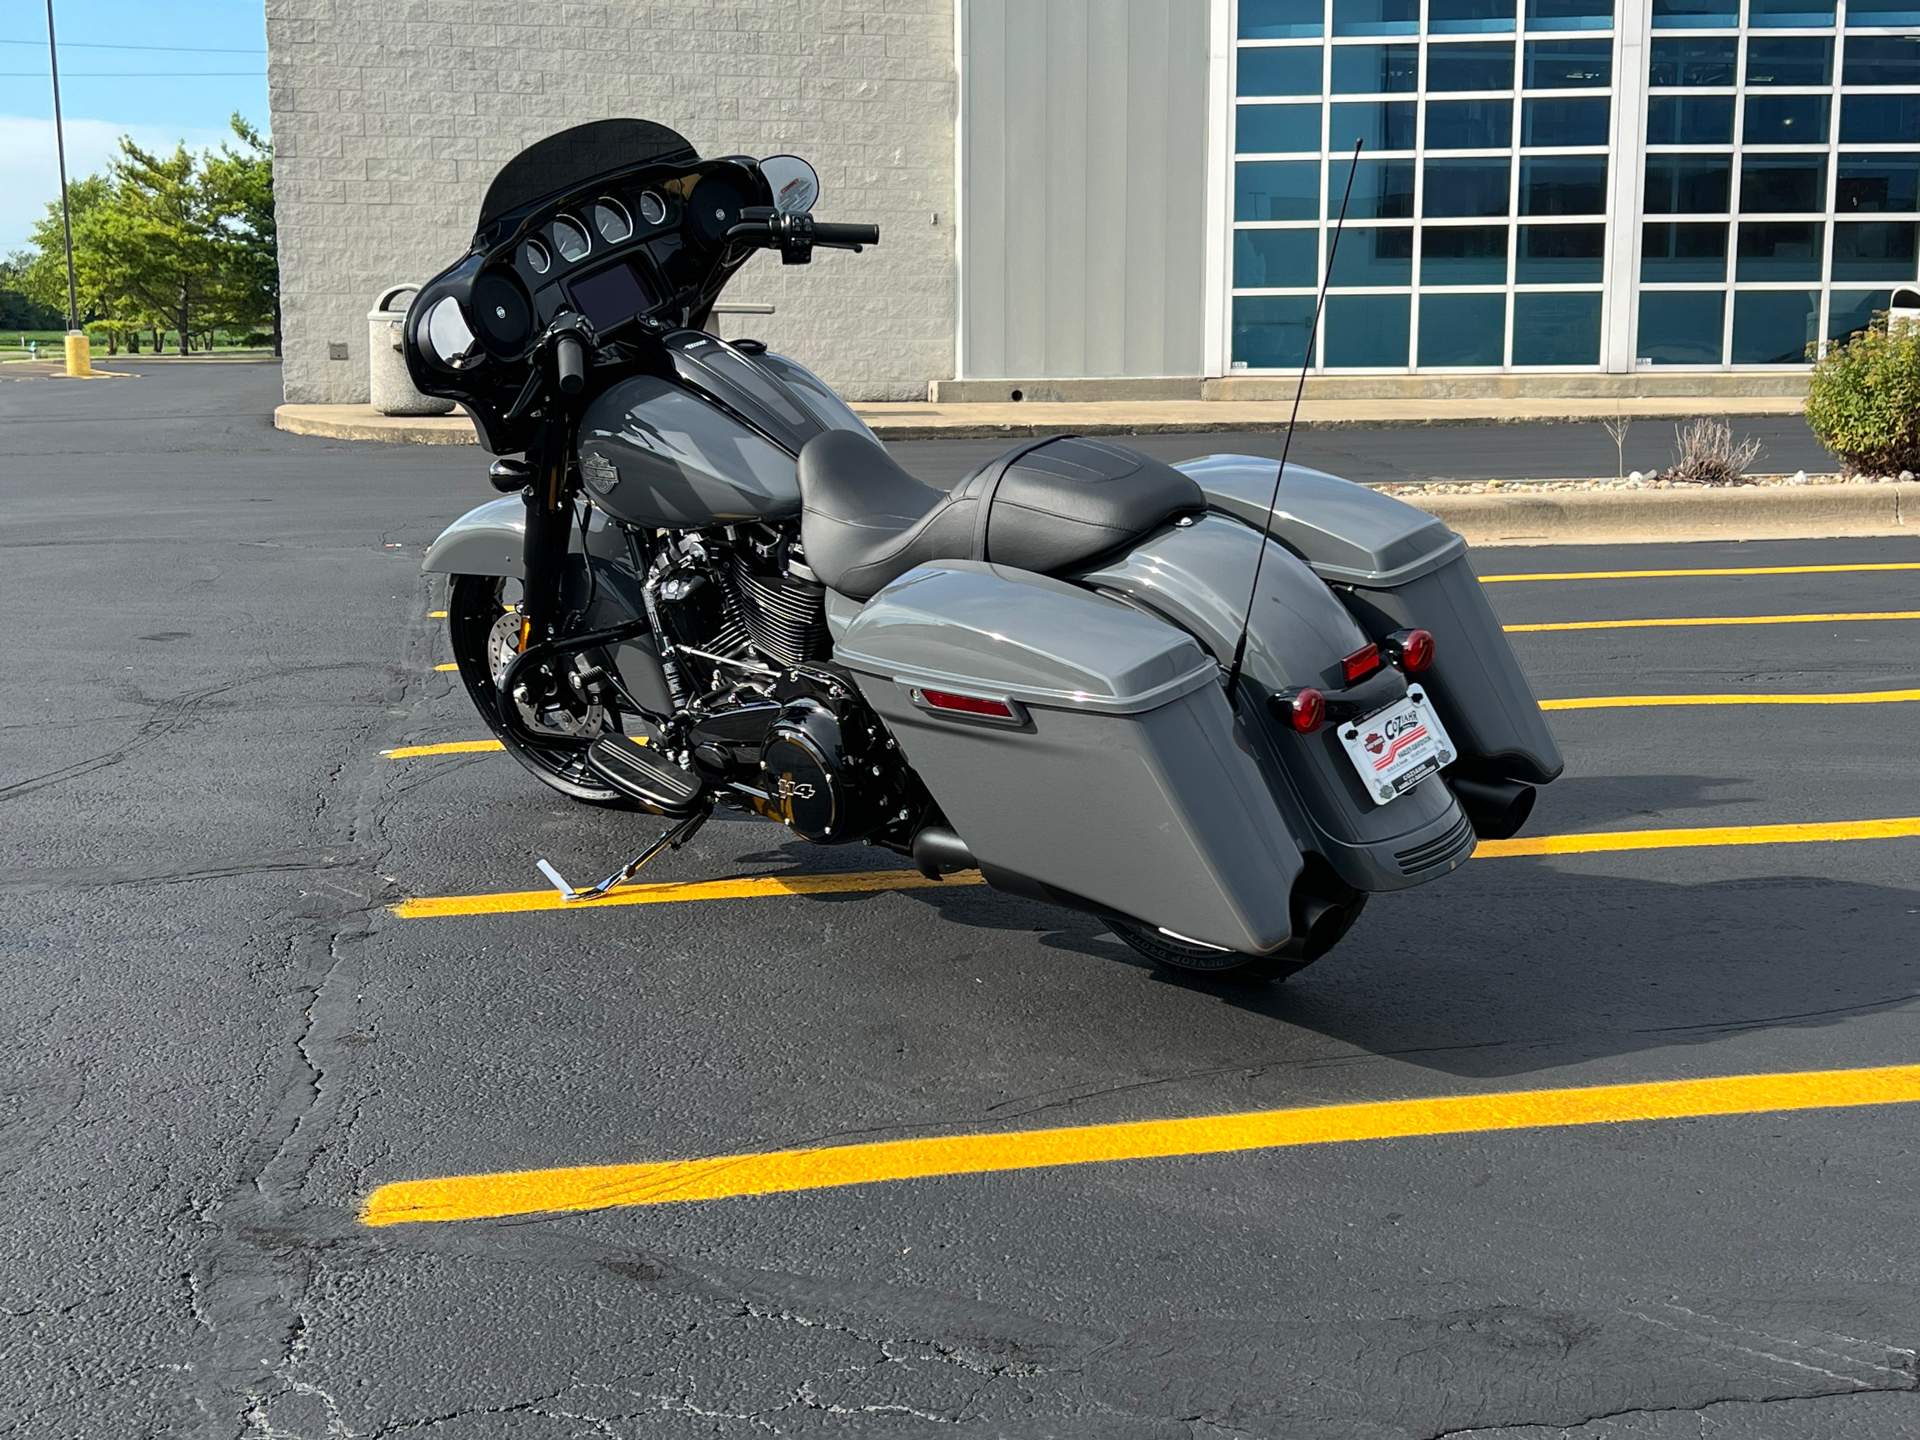 2022 Harley-Davidson Street Glide® Special in Forsyth, Illinois - Photo 6